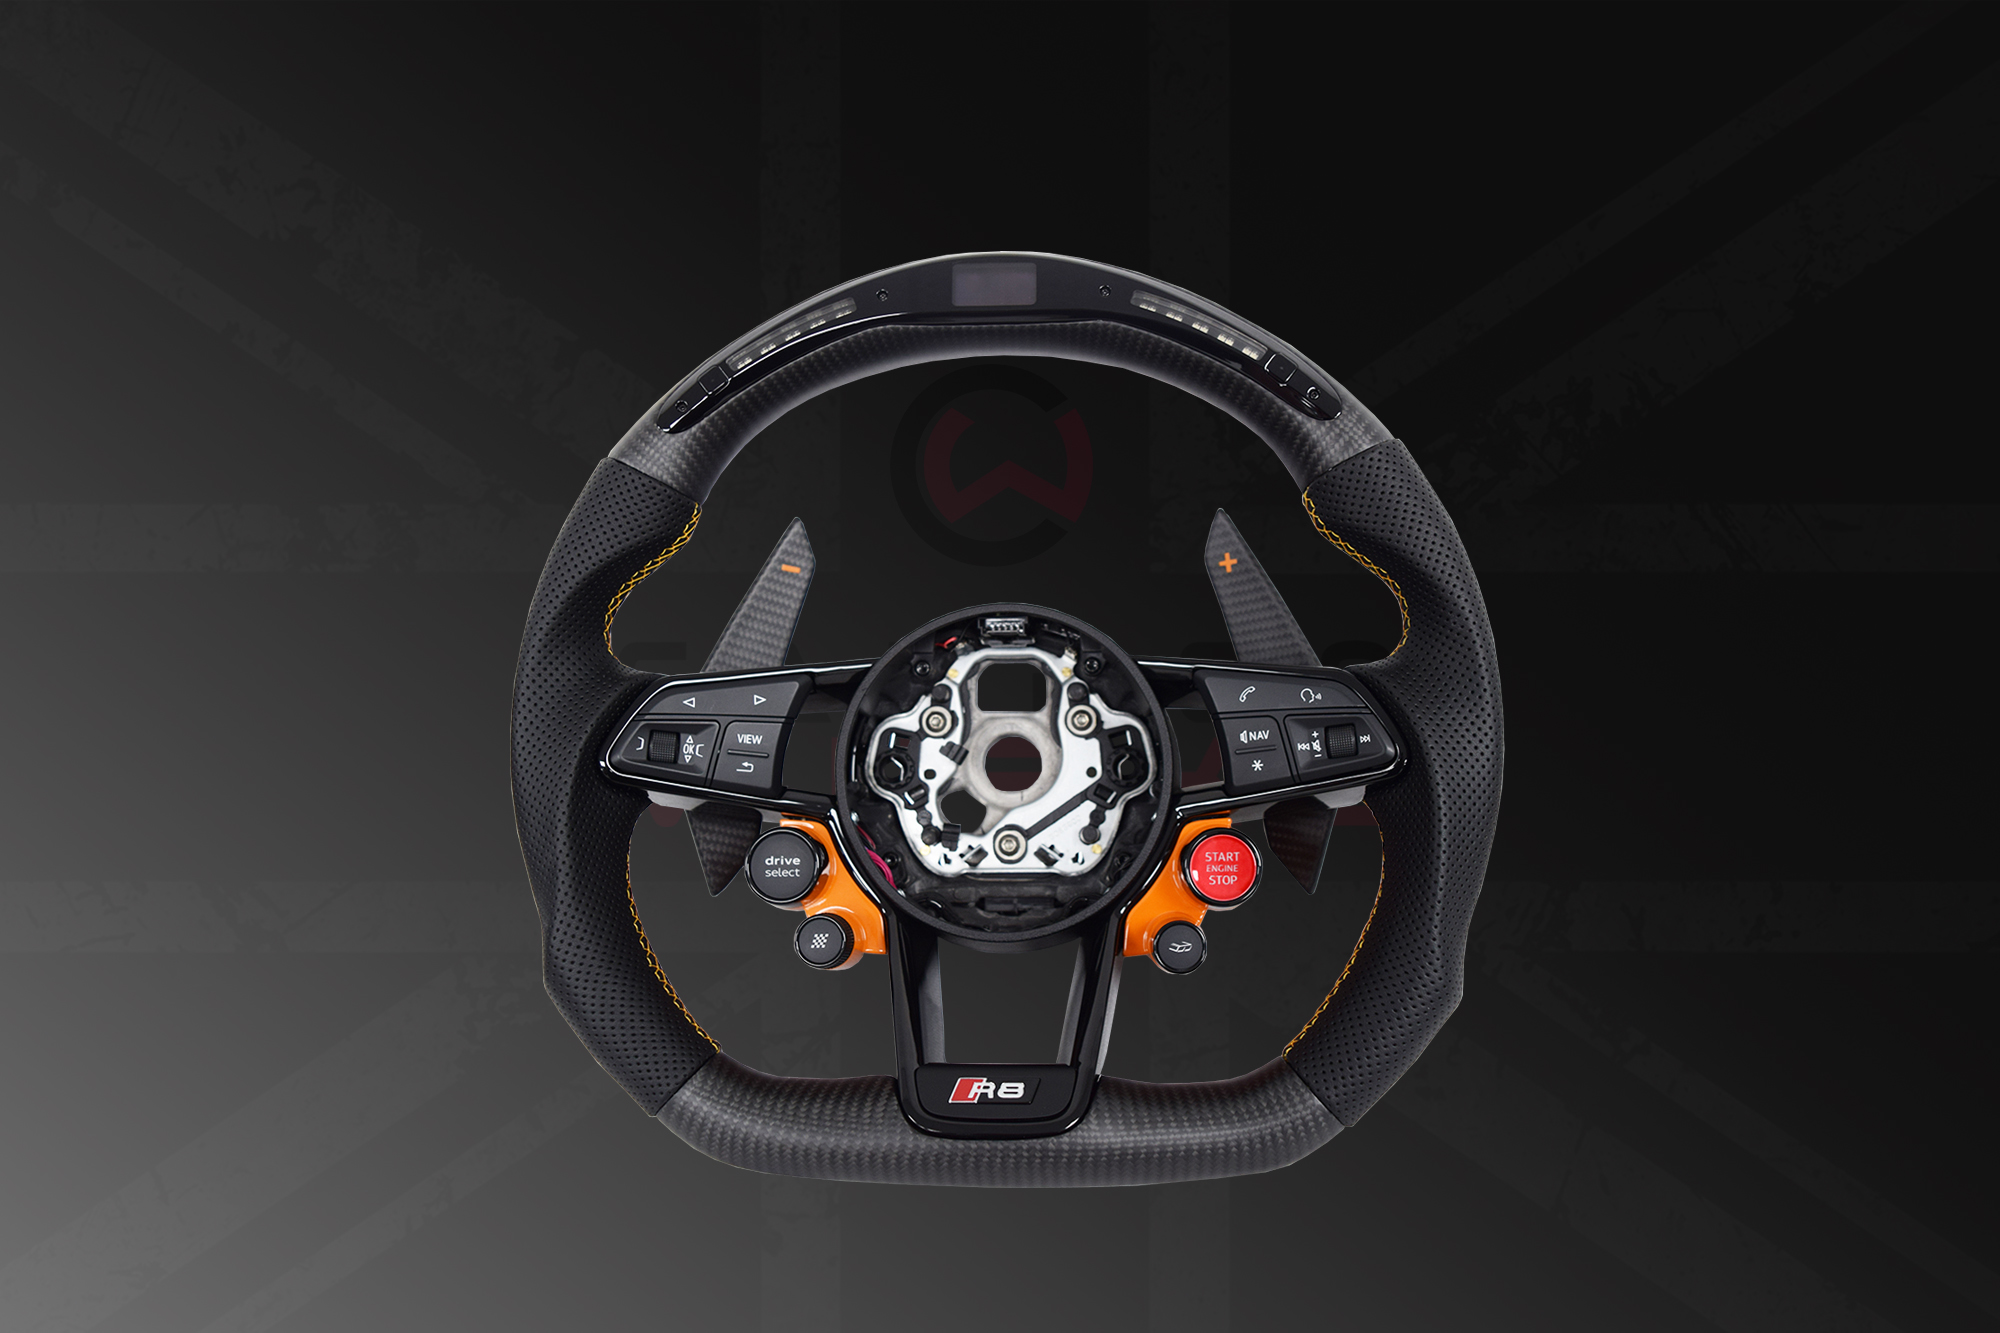 Carbonwurks Track Car Build - Race Steering Wheel